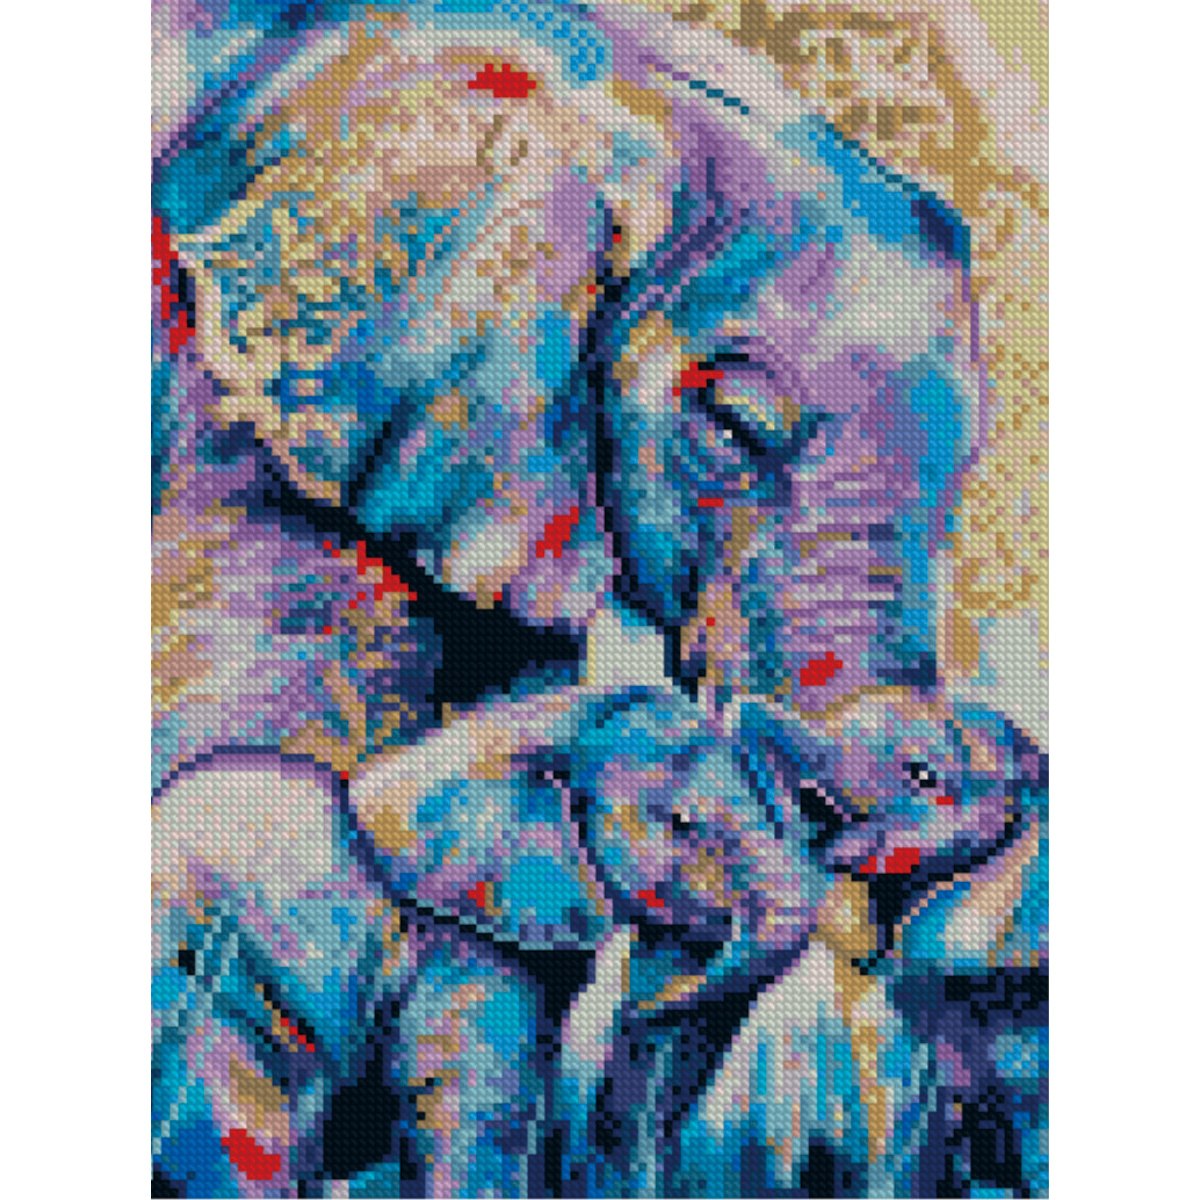 Diamond painting HX289 "Mother with elephants", size 30x40 cm